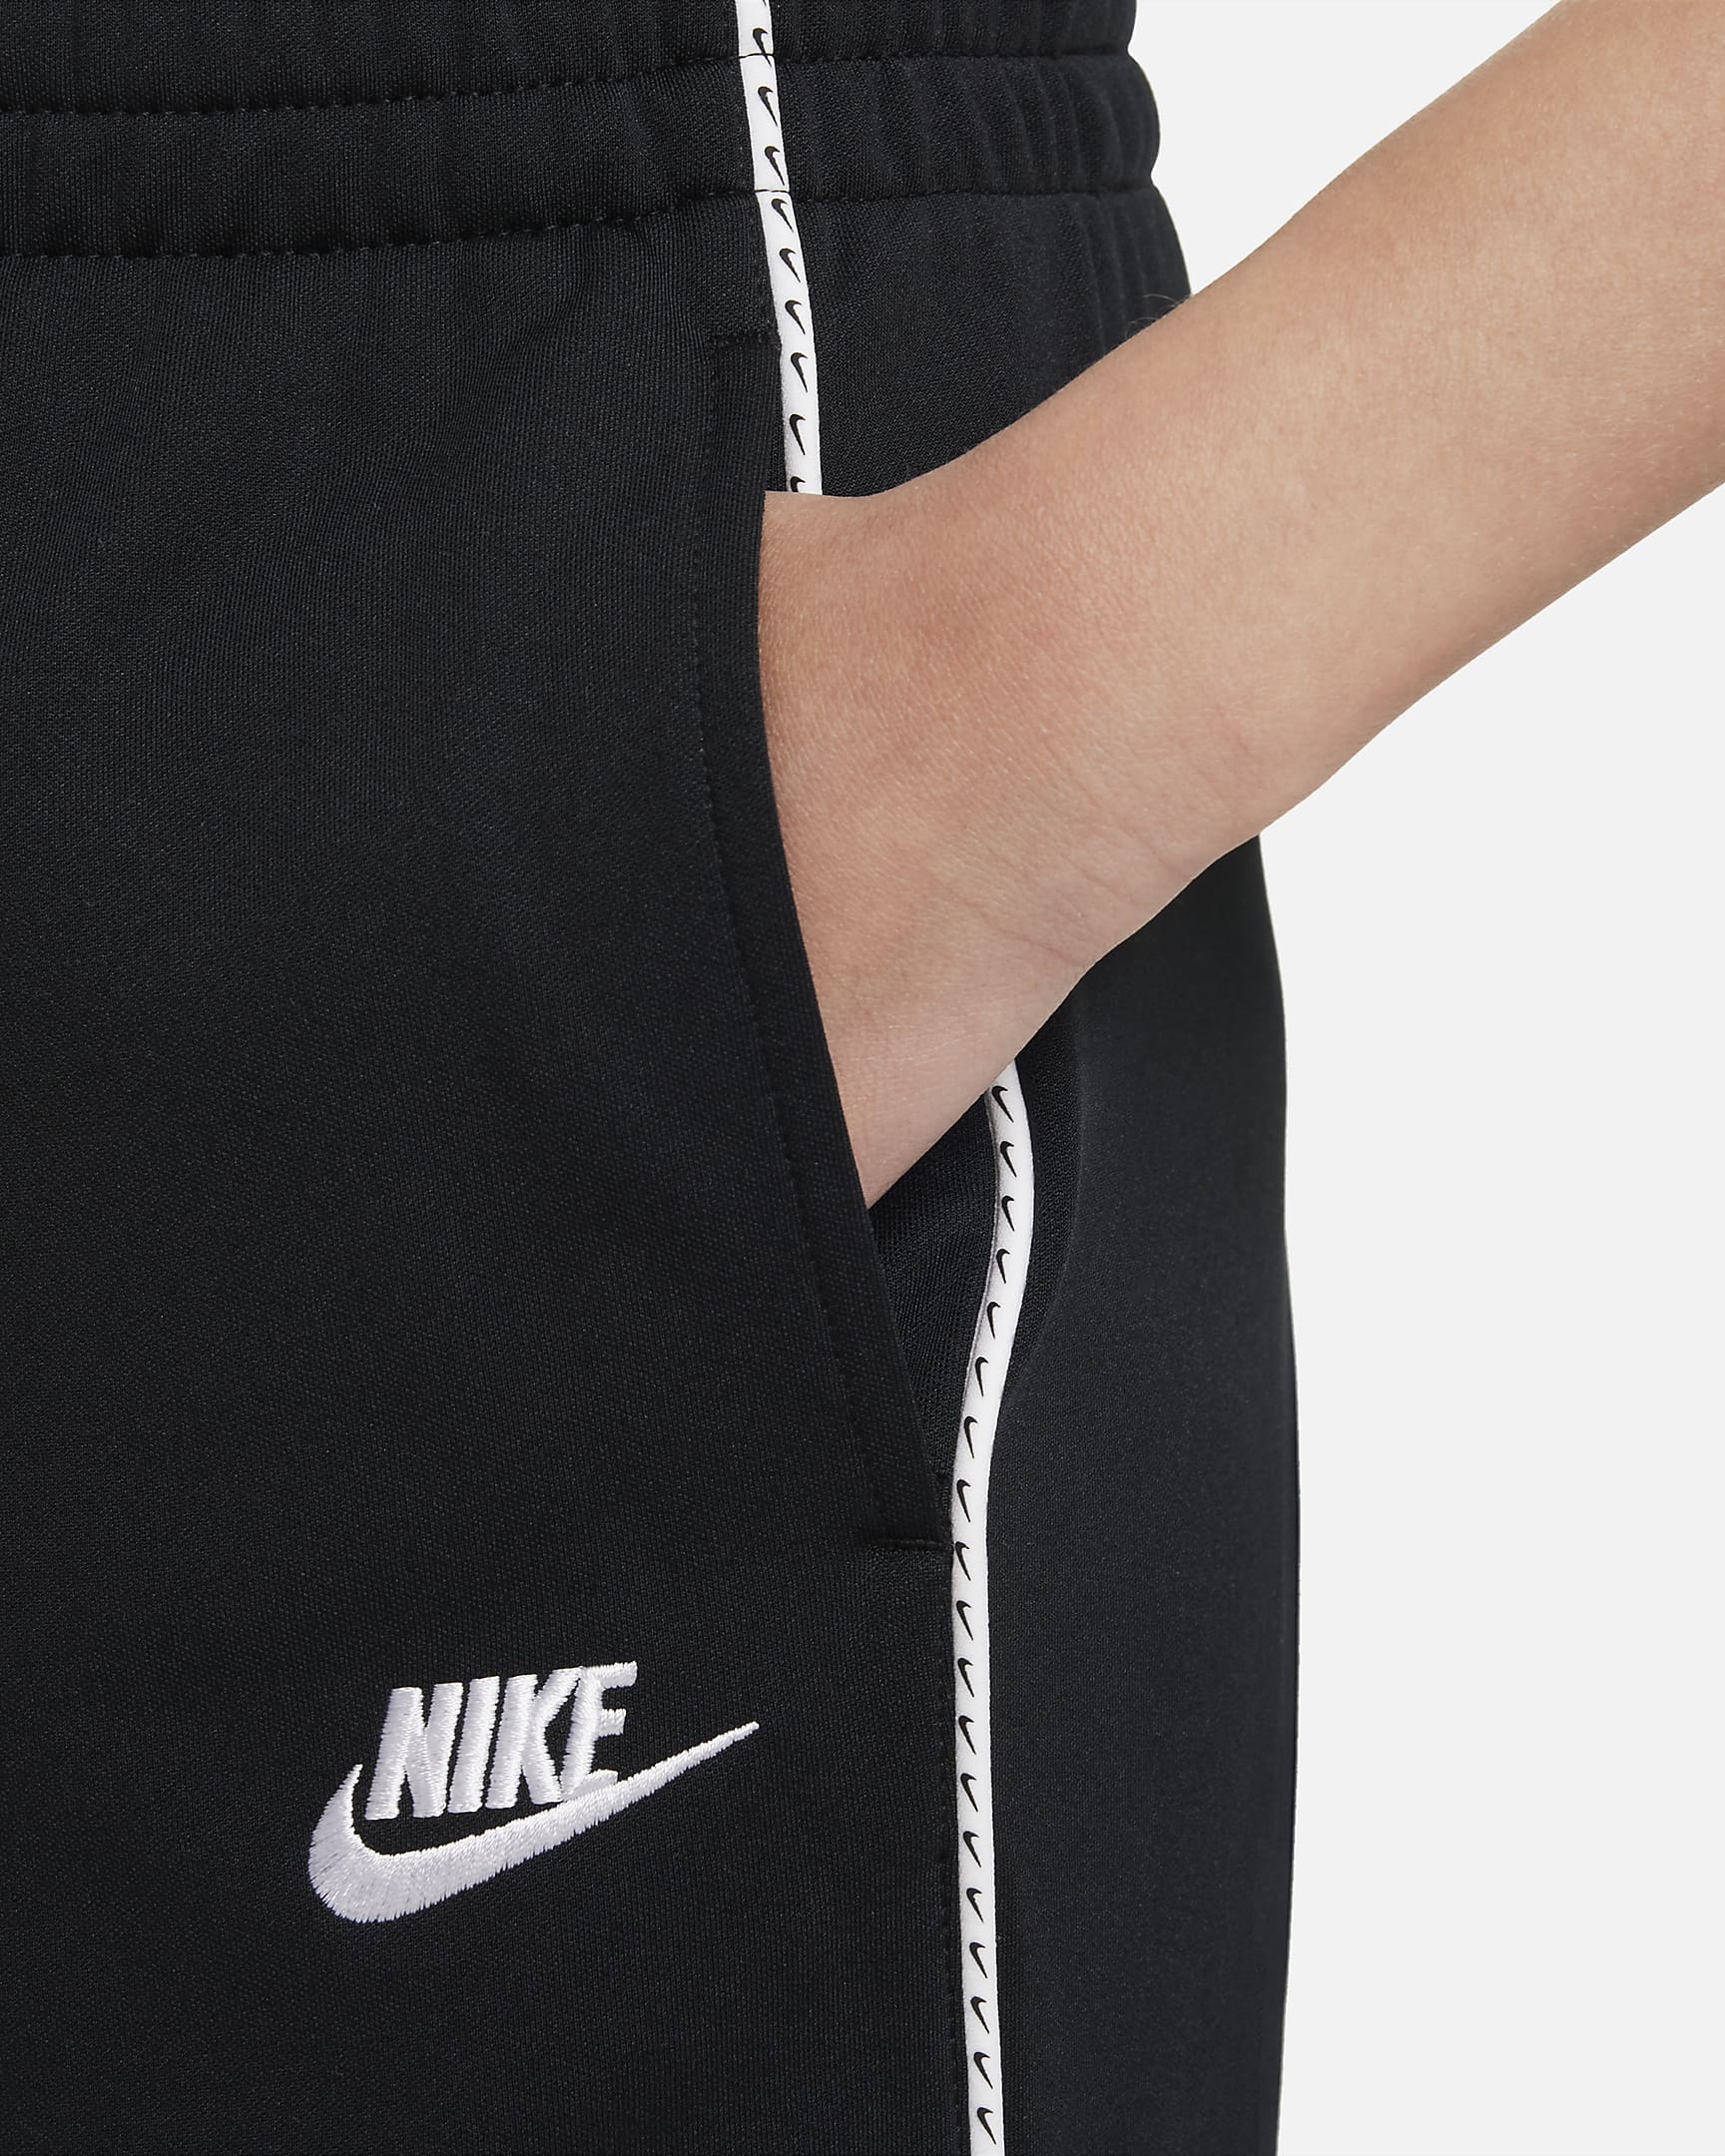 Nike Sportswear Older Kids' (Girls') Tracksuit - Black/Black/White/White